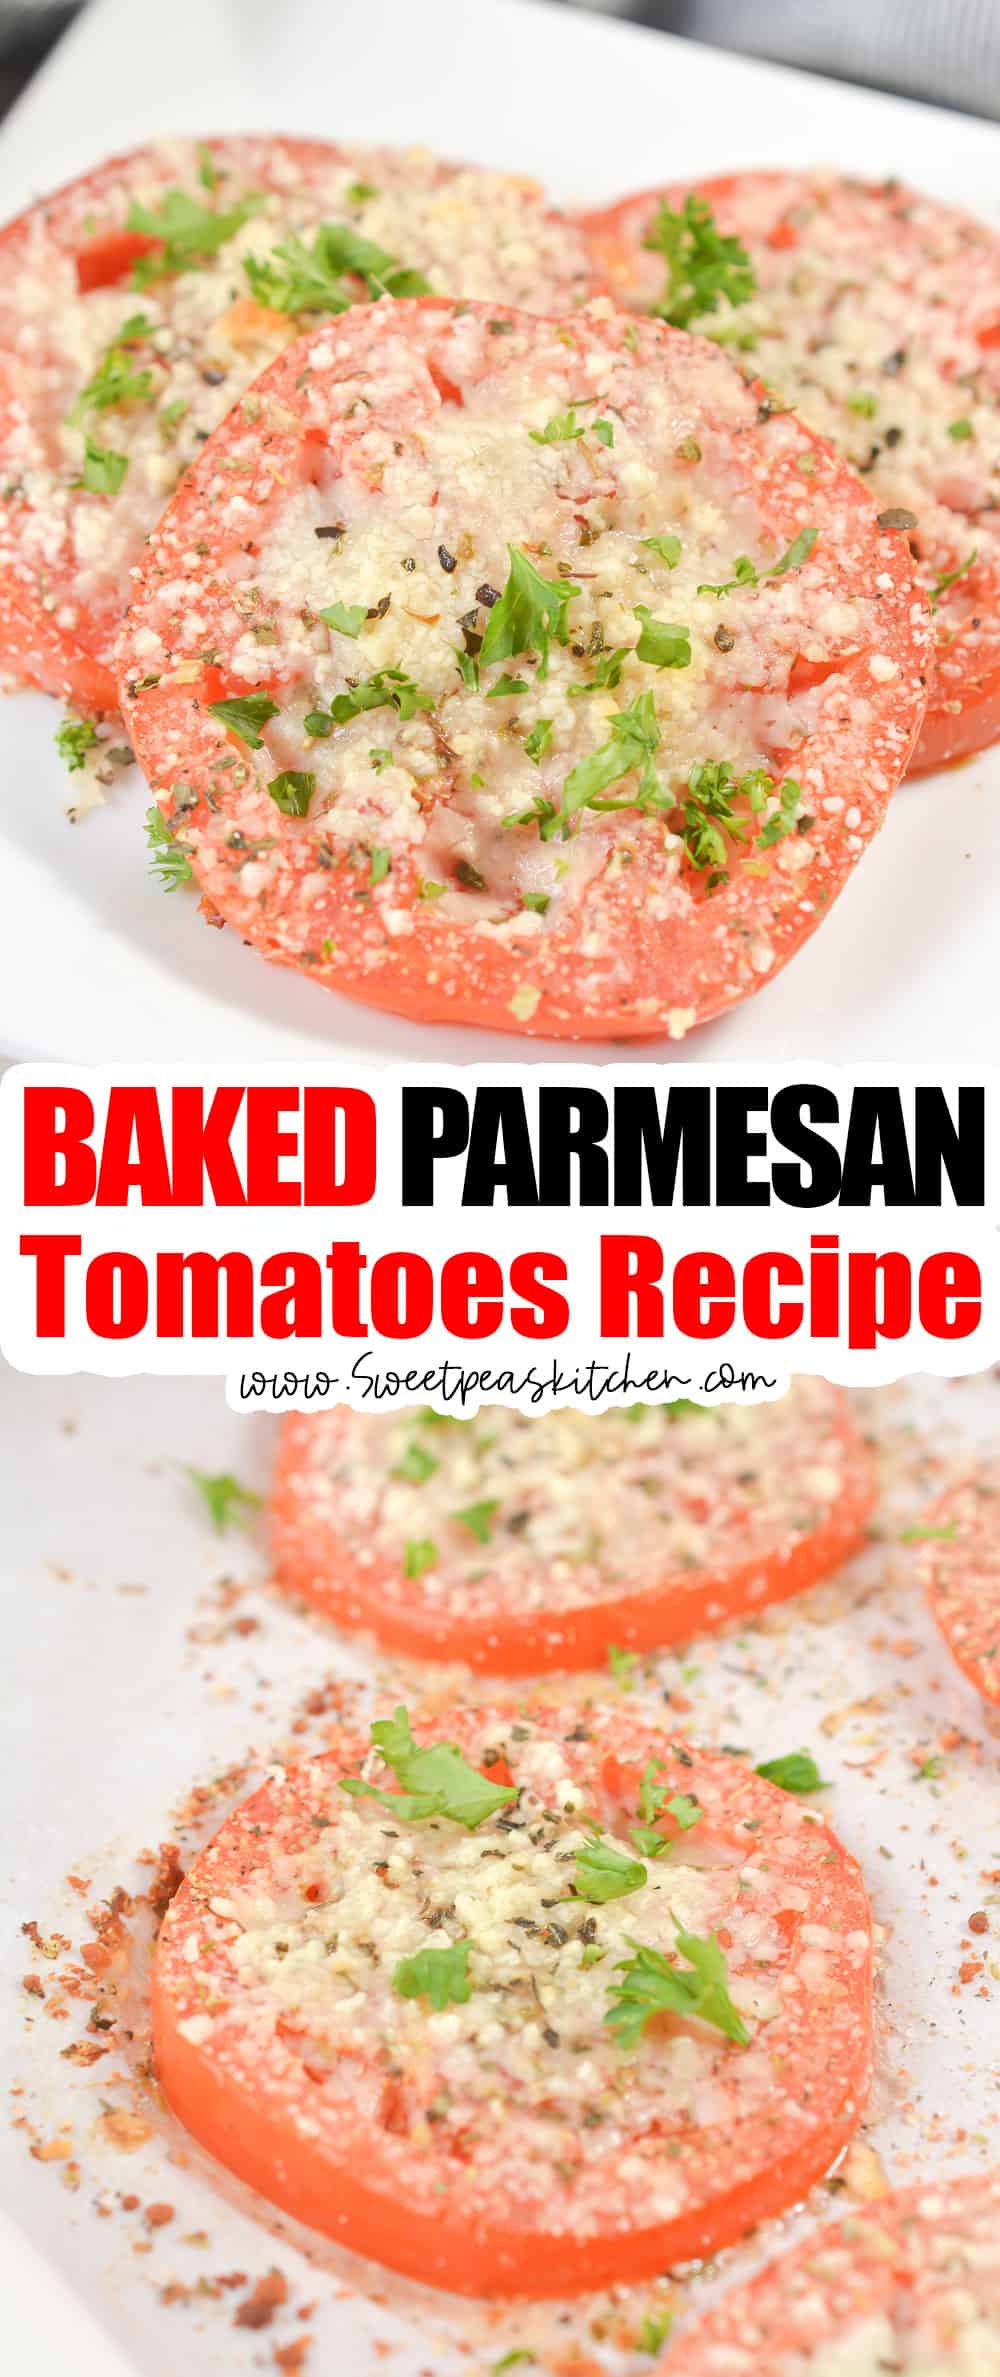 Baked Parmesan Tomatoes